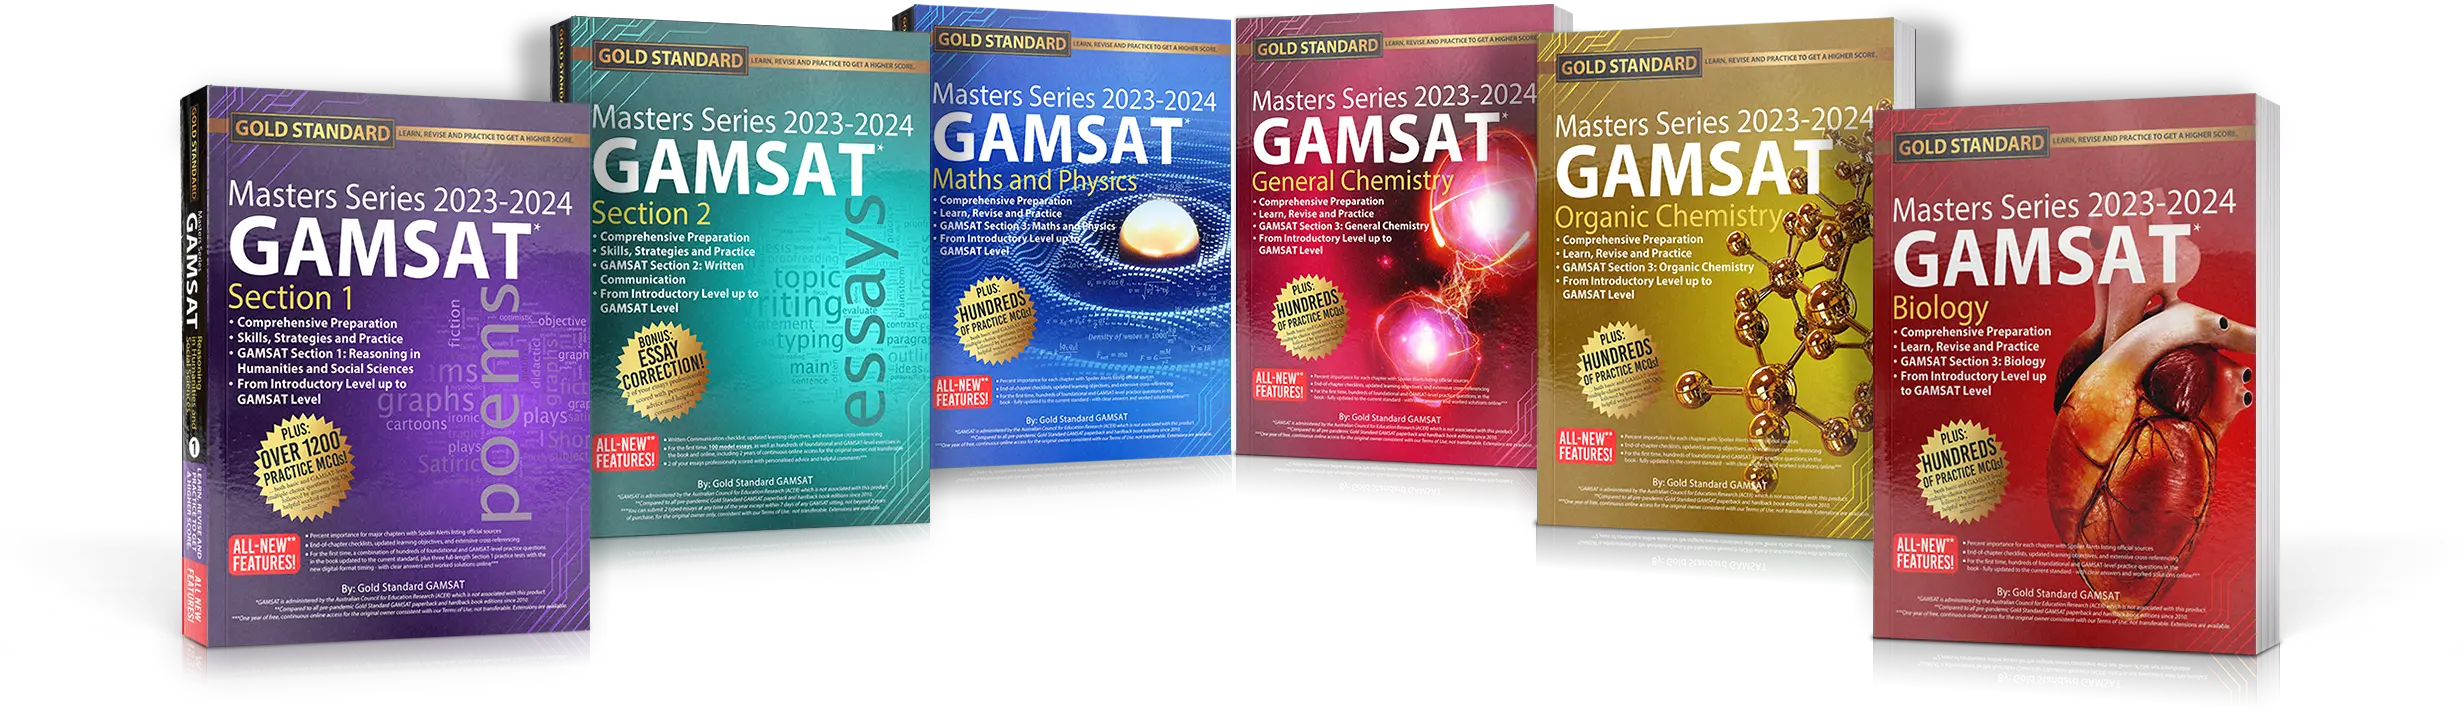 Gold Standard's new 2022 Masters Series GAMSAT preparation books